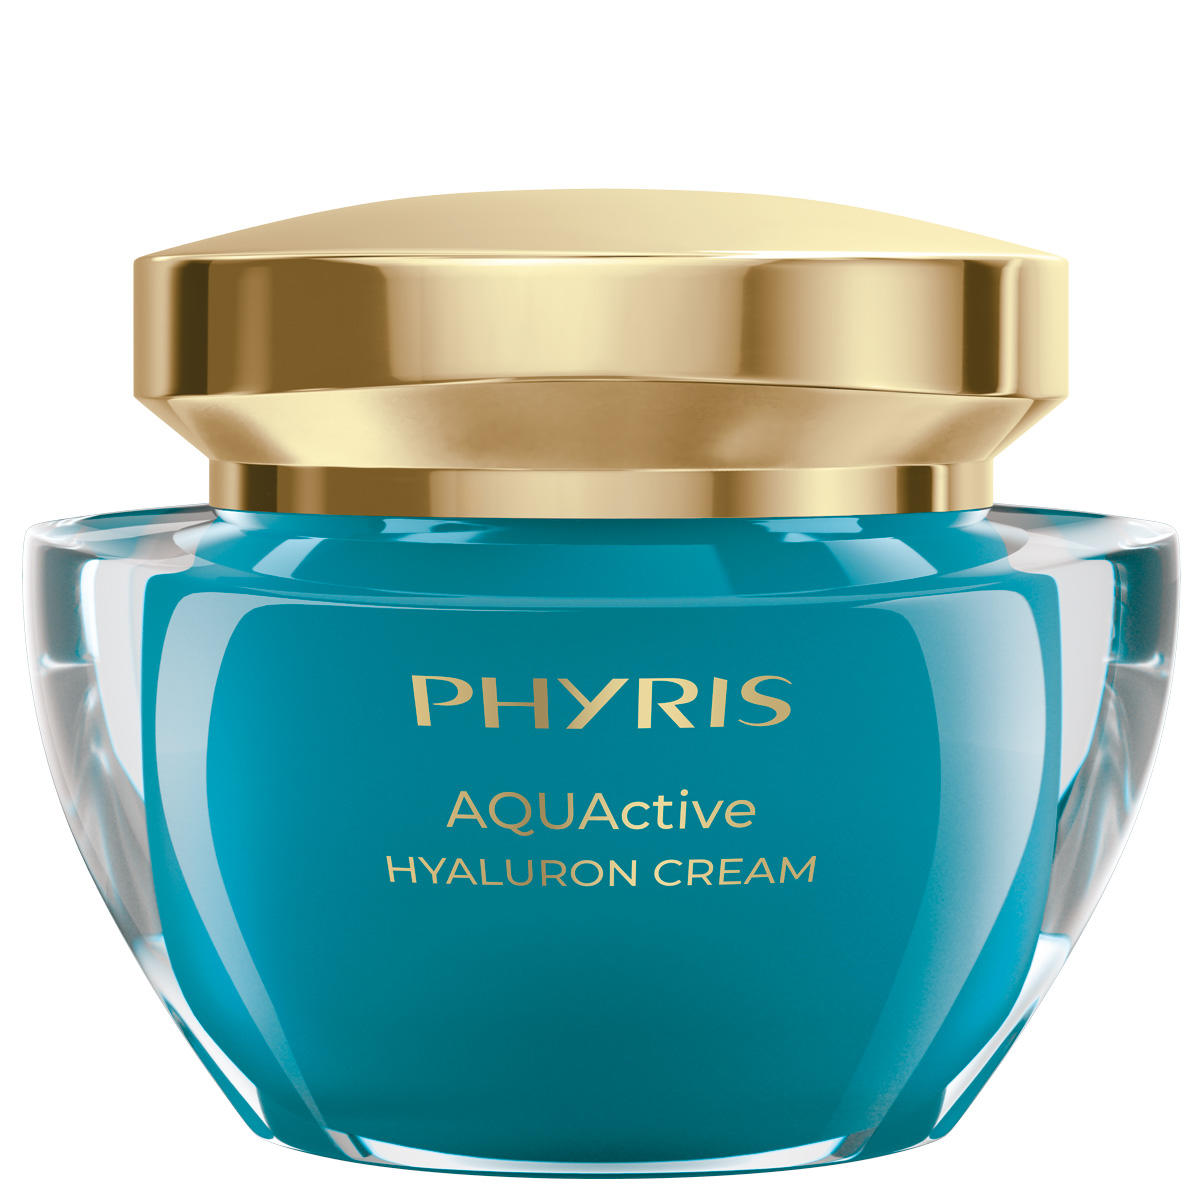 PHYRIS AQUActive Hyaluron Cream 50 ml - 1